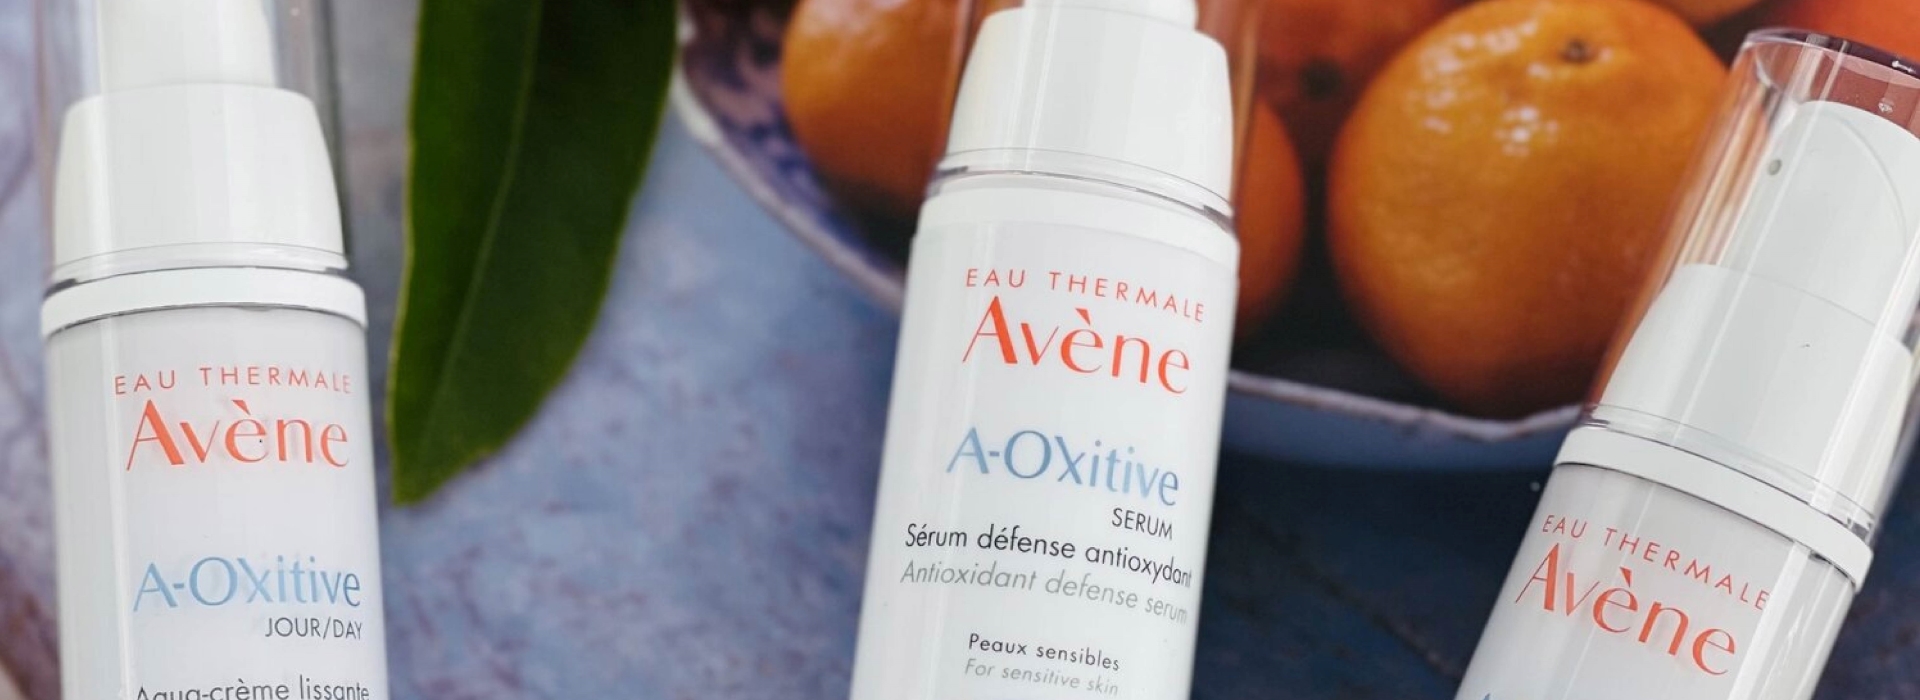 Avene A-Oxitive